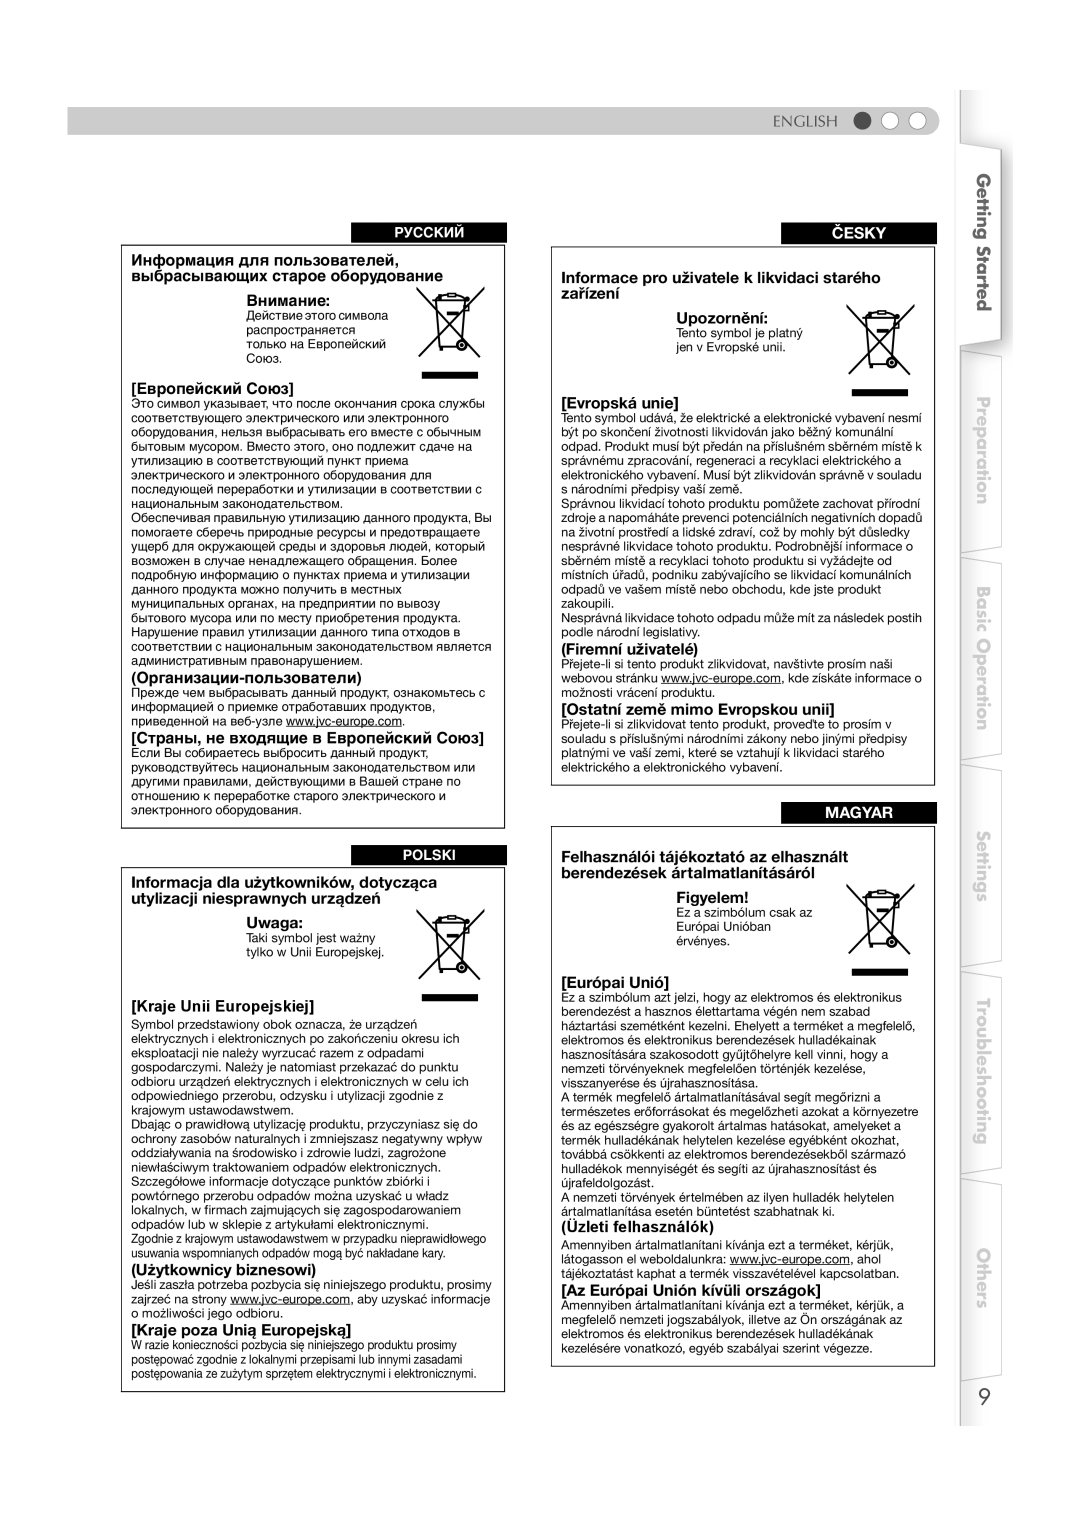 JVC DLA-HD1 manual Getting Started, Preparation Basic Operation Settings Troubleshooting Others, English, Česky, Magyar 